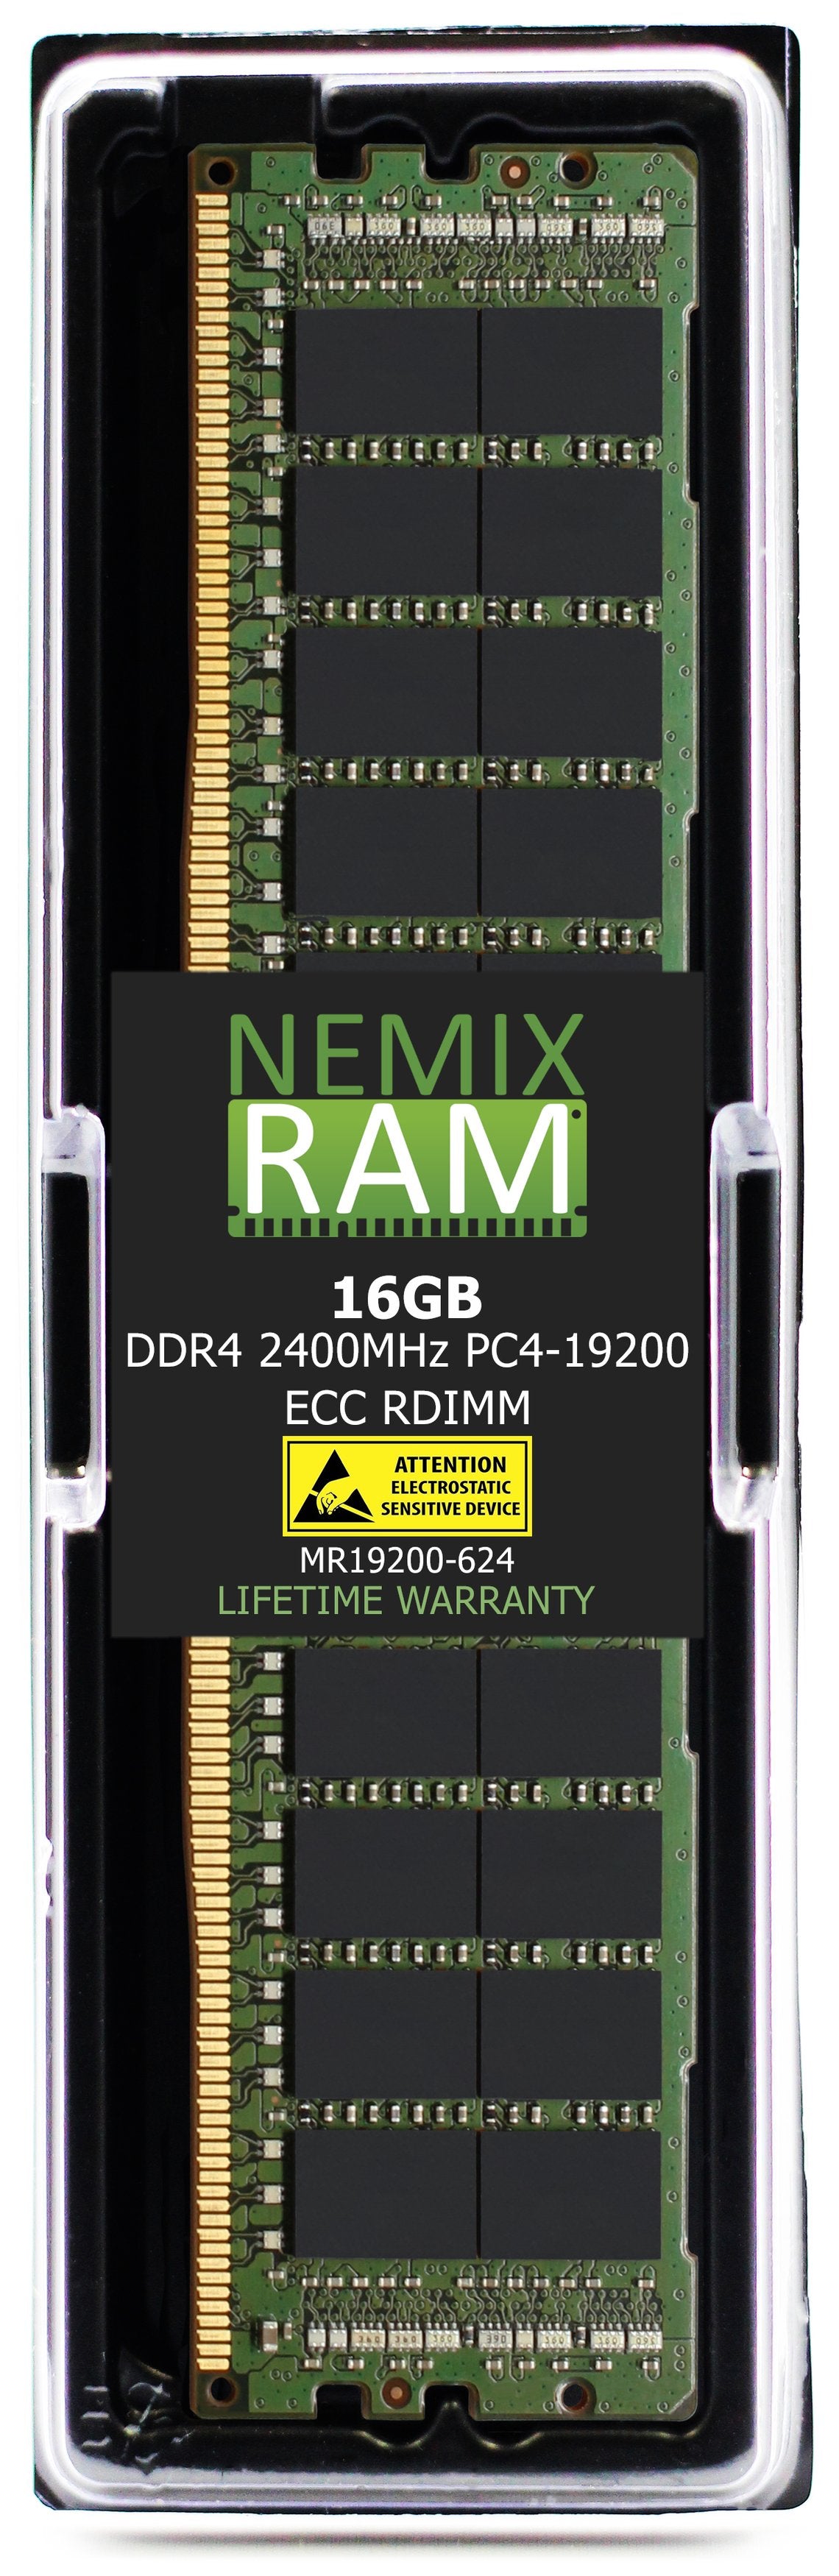 16GB DDR4 2400MHZ PC4-19200 RDIMM Compatible with Supermicro MEM-DR416L-HL01-ER24